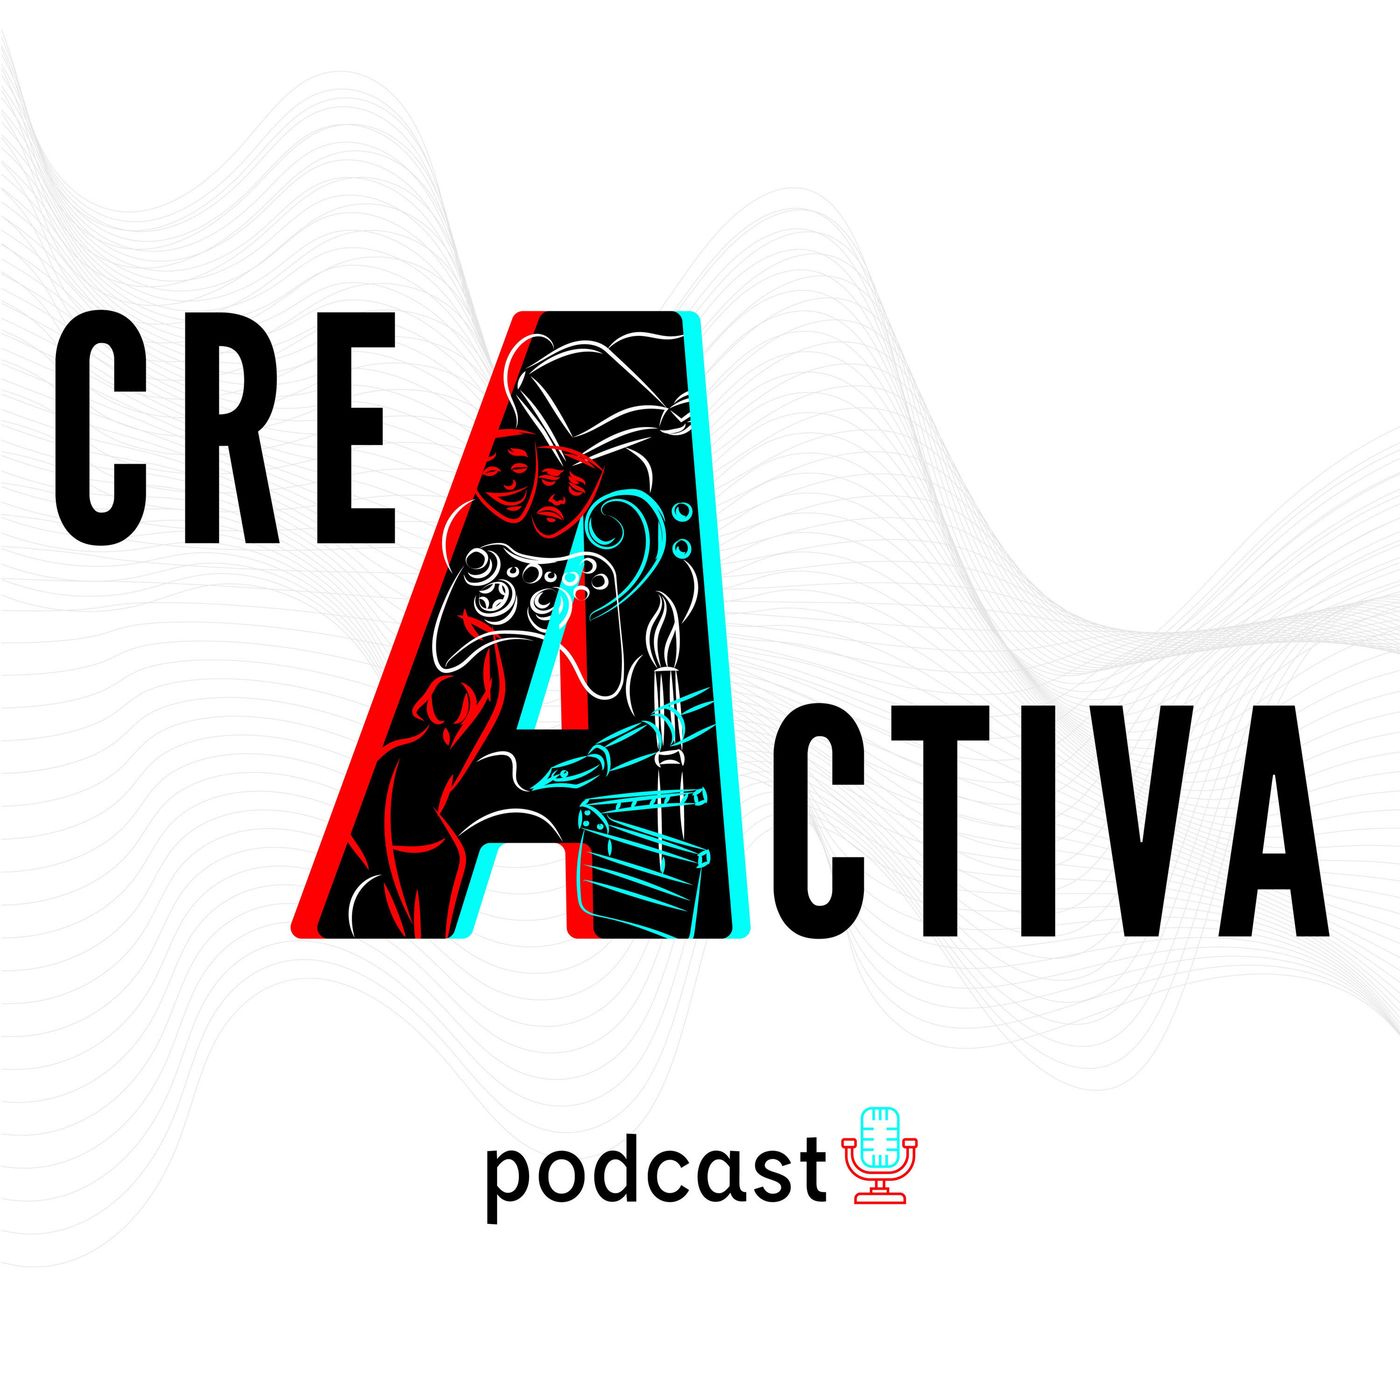 Creactiva Podcast - Trailer